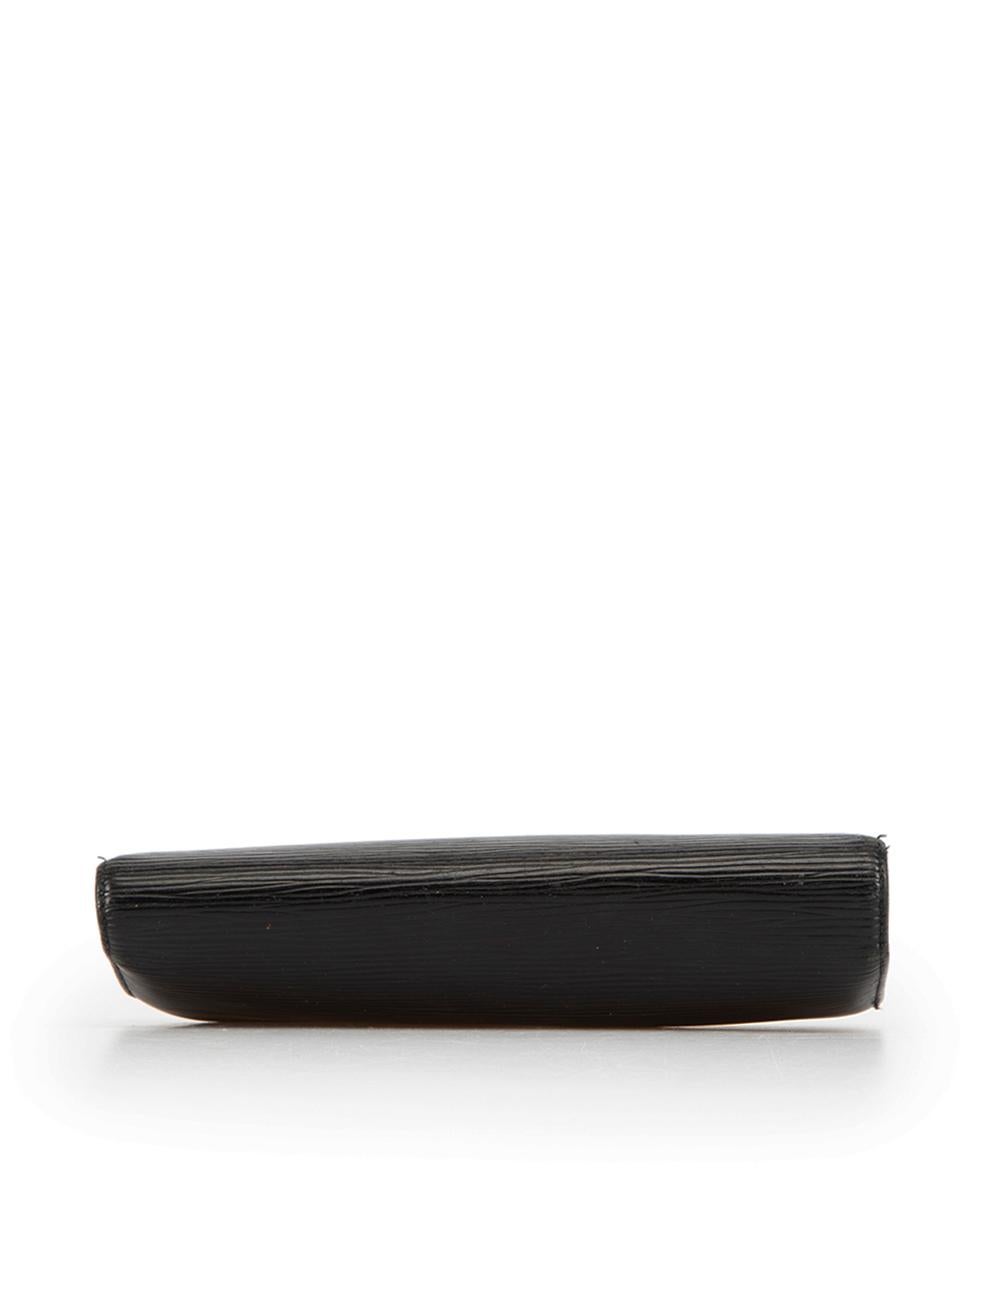 Louis Vuitton Women's Black Epi Leather French Purse Wallet 1